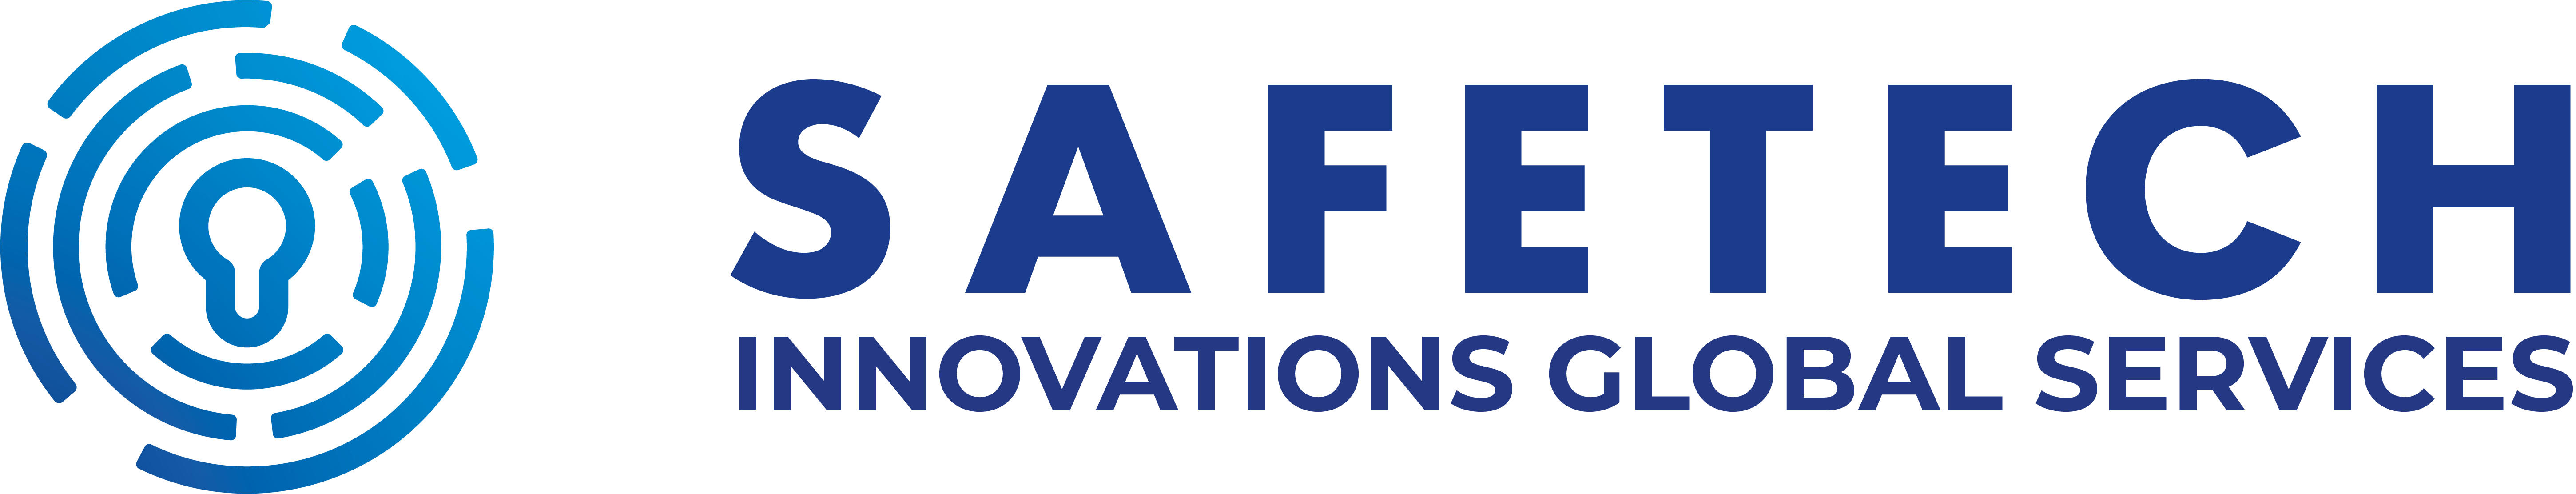 safetech logo 